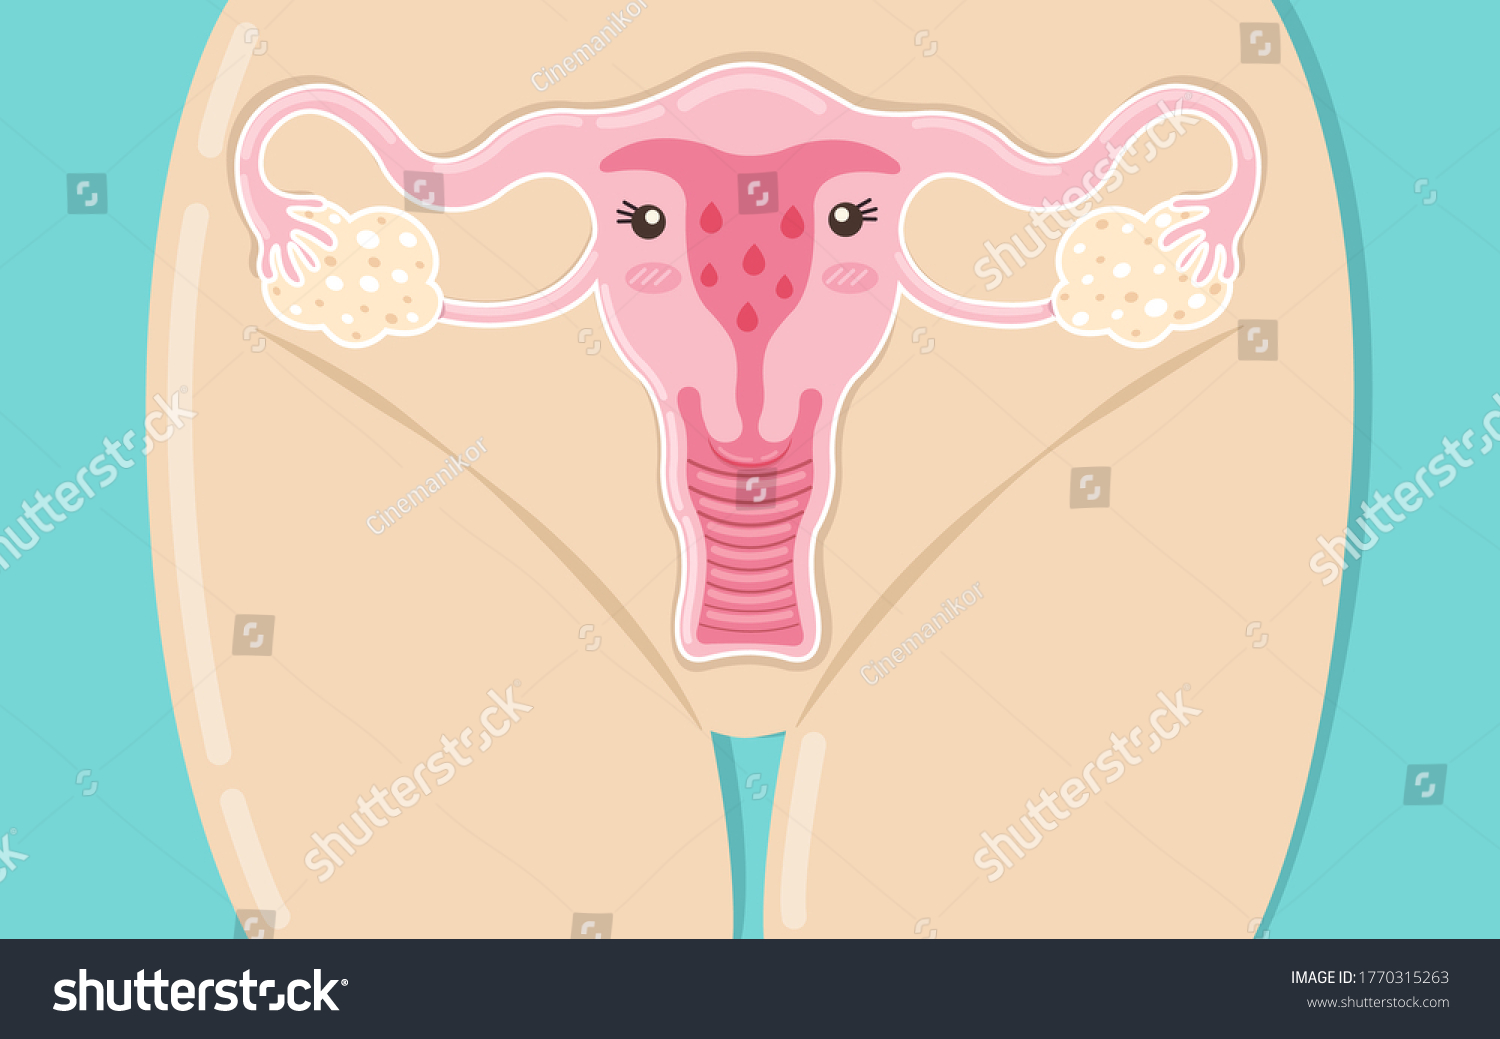 Human Anatomy Female Reproductive System Female เวกเตอร์สต็อก ปลอดค่าลิขสิทธิ์ 1770315263 4024